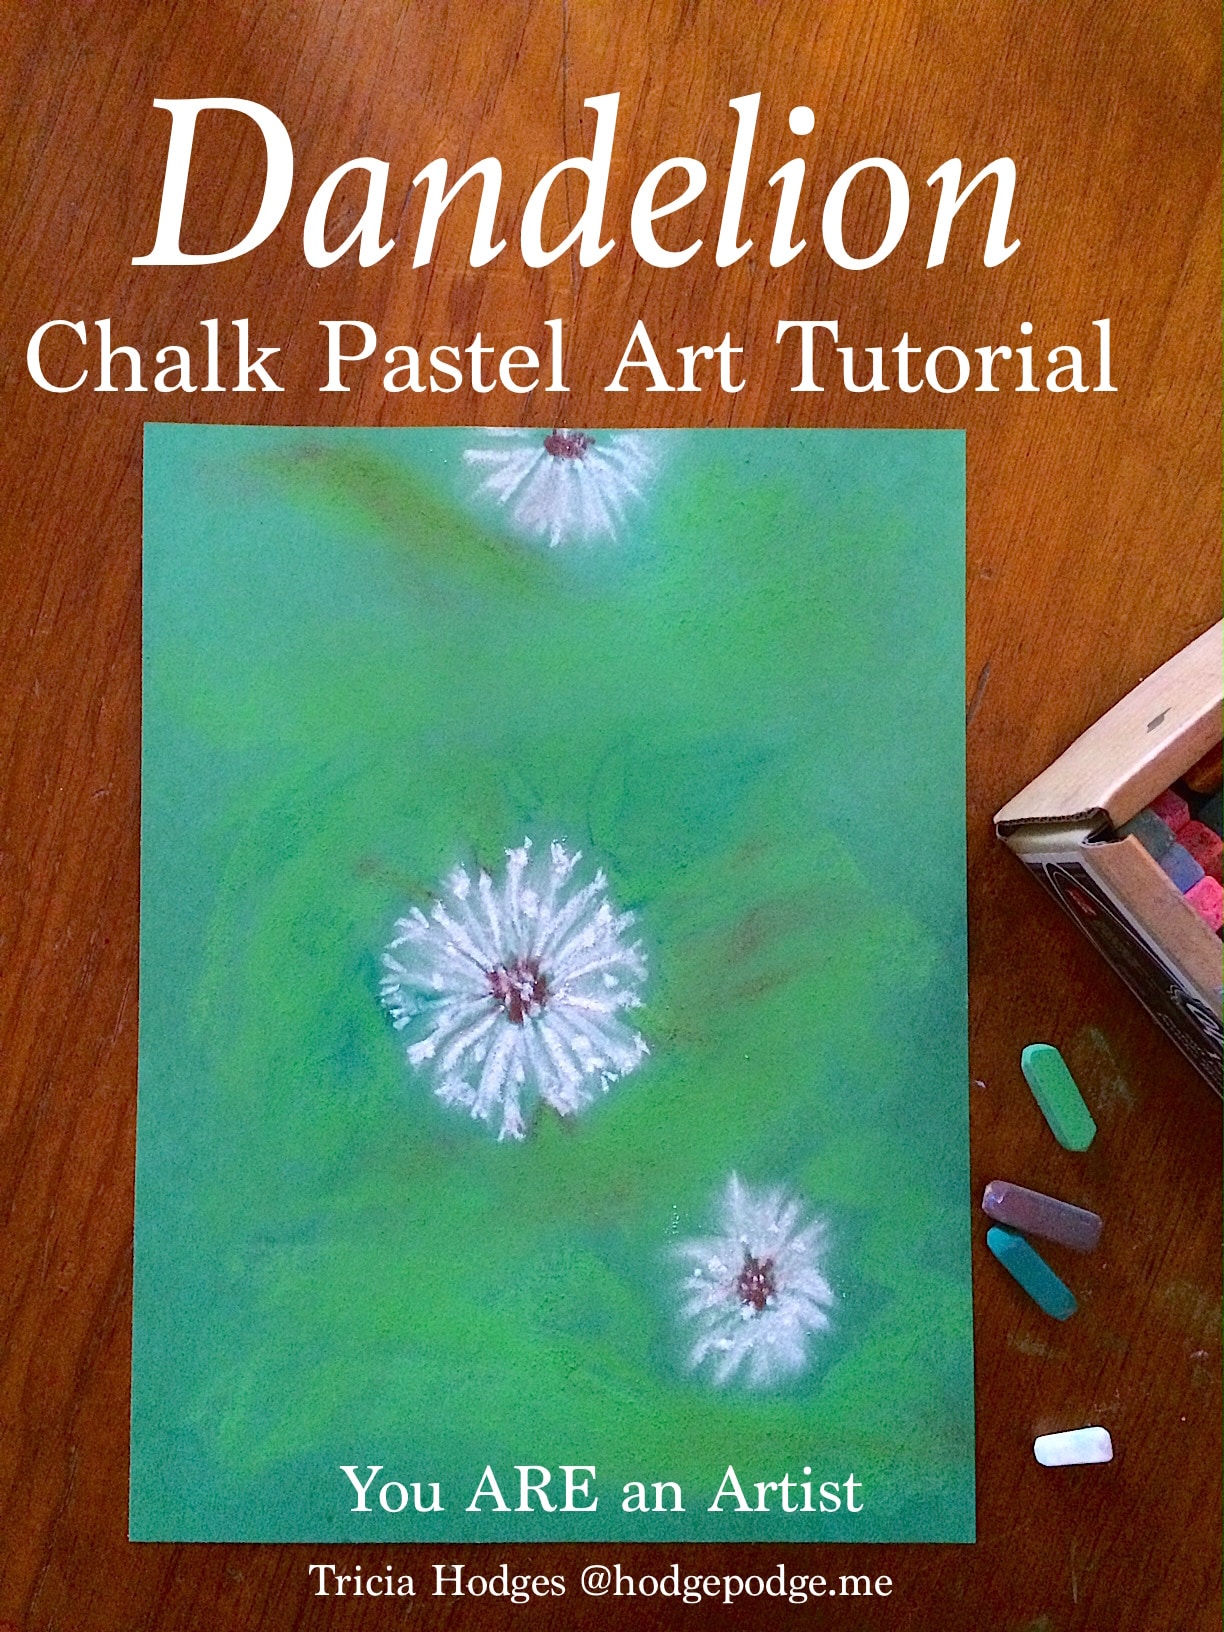 Dandelion Chalk Pastel Art Tutorial